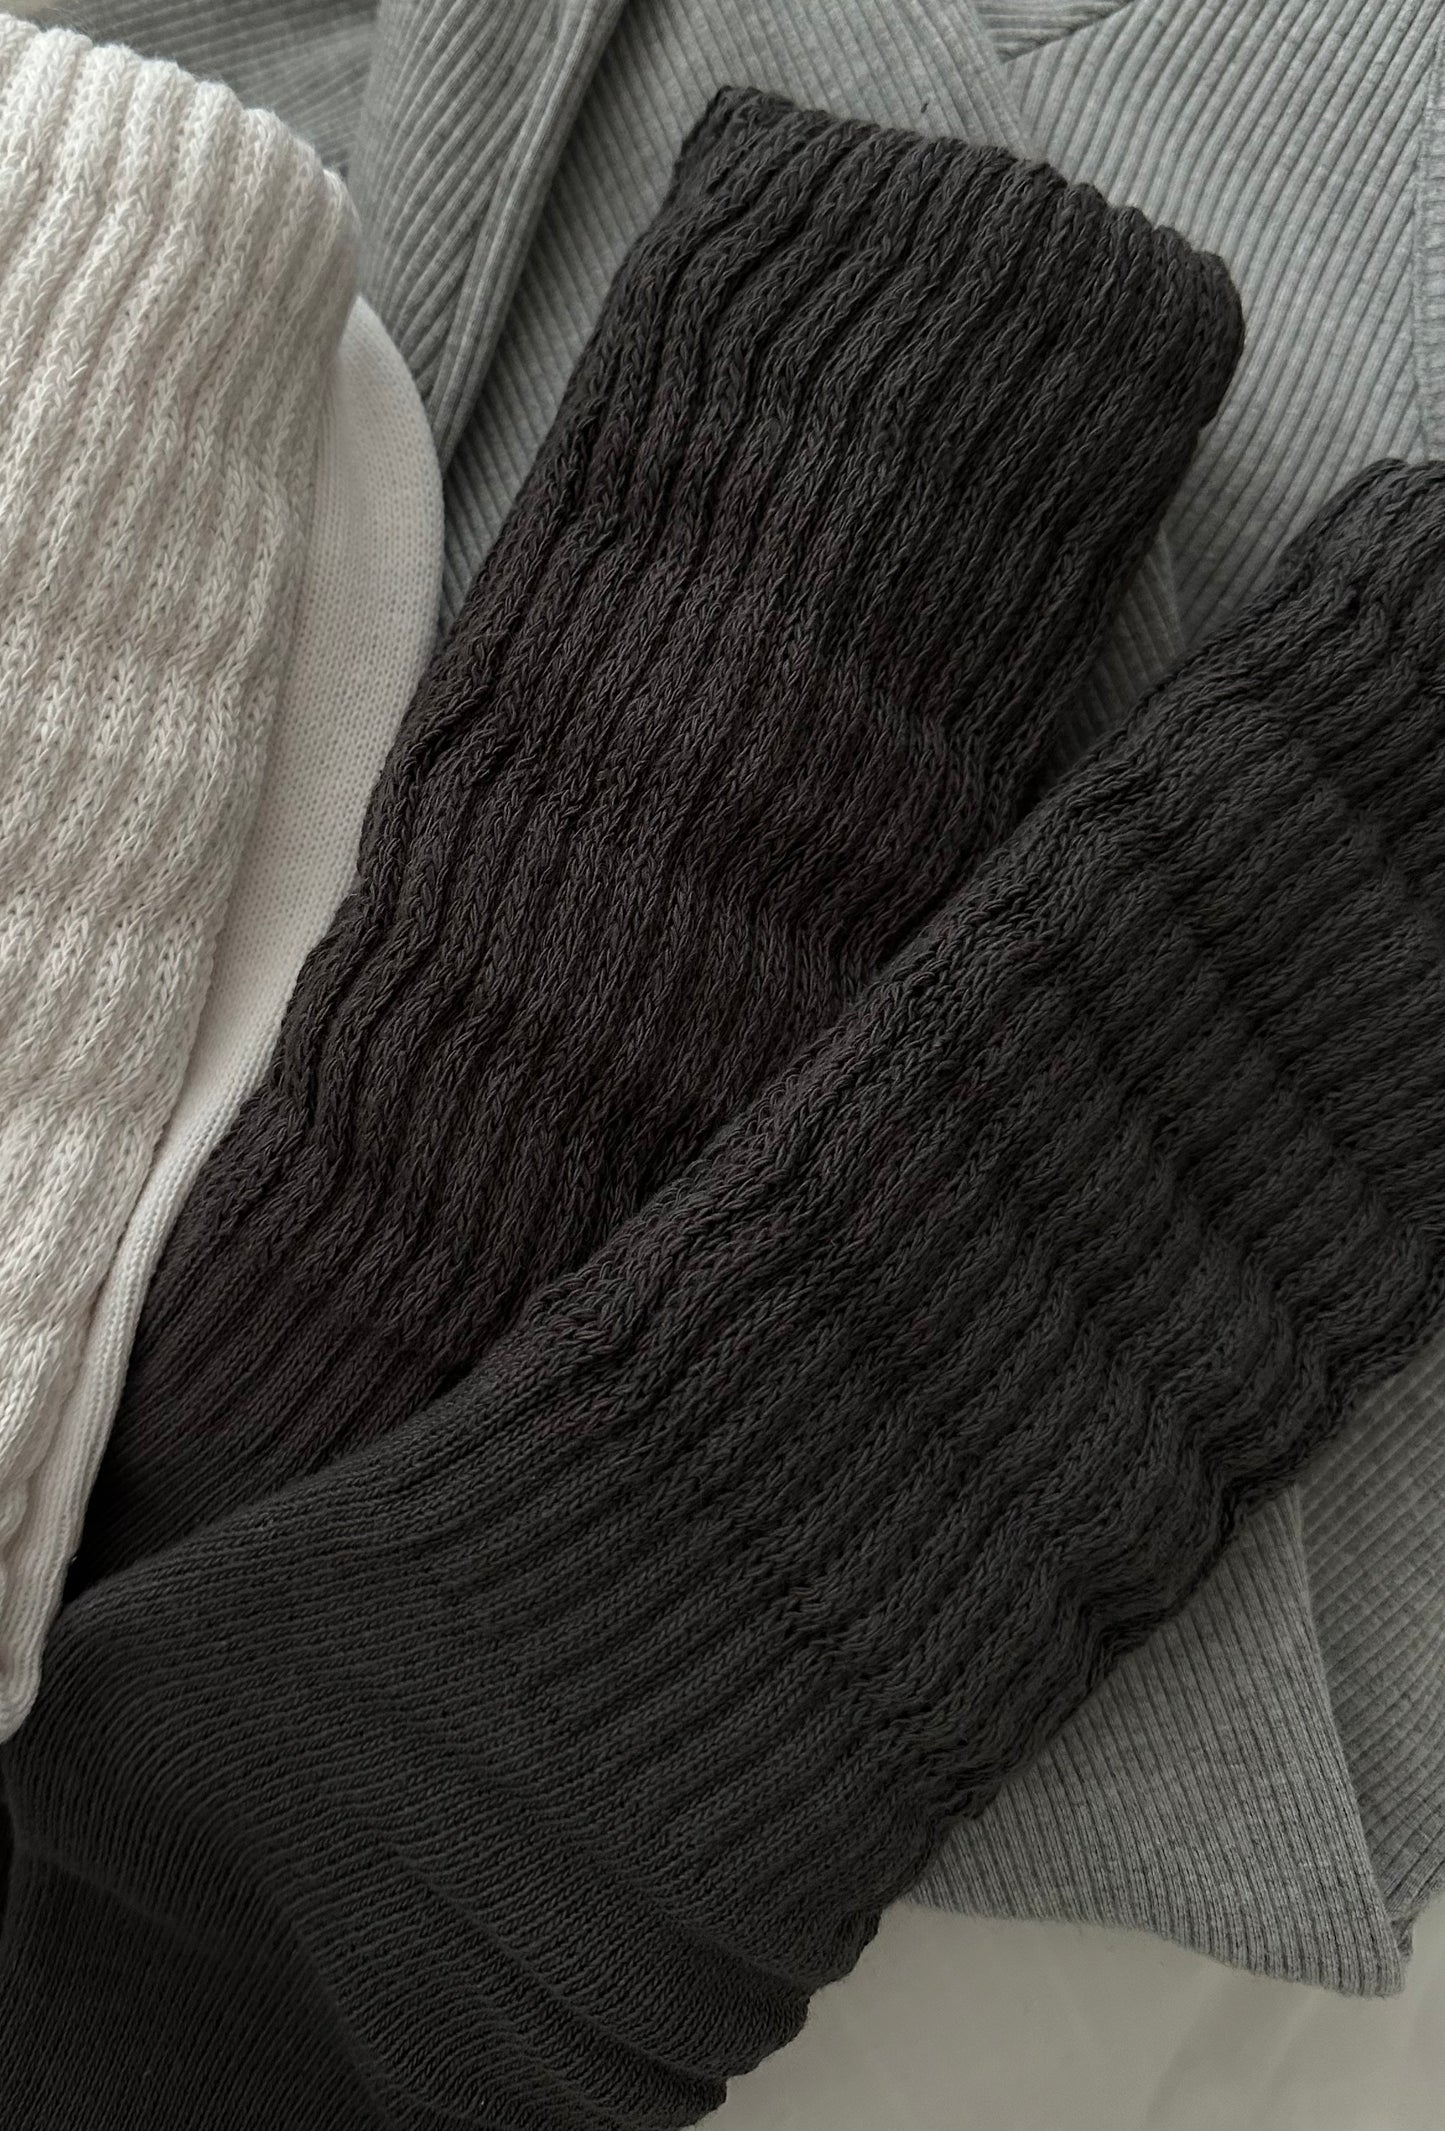 Charcoal Gray slouchy socks